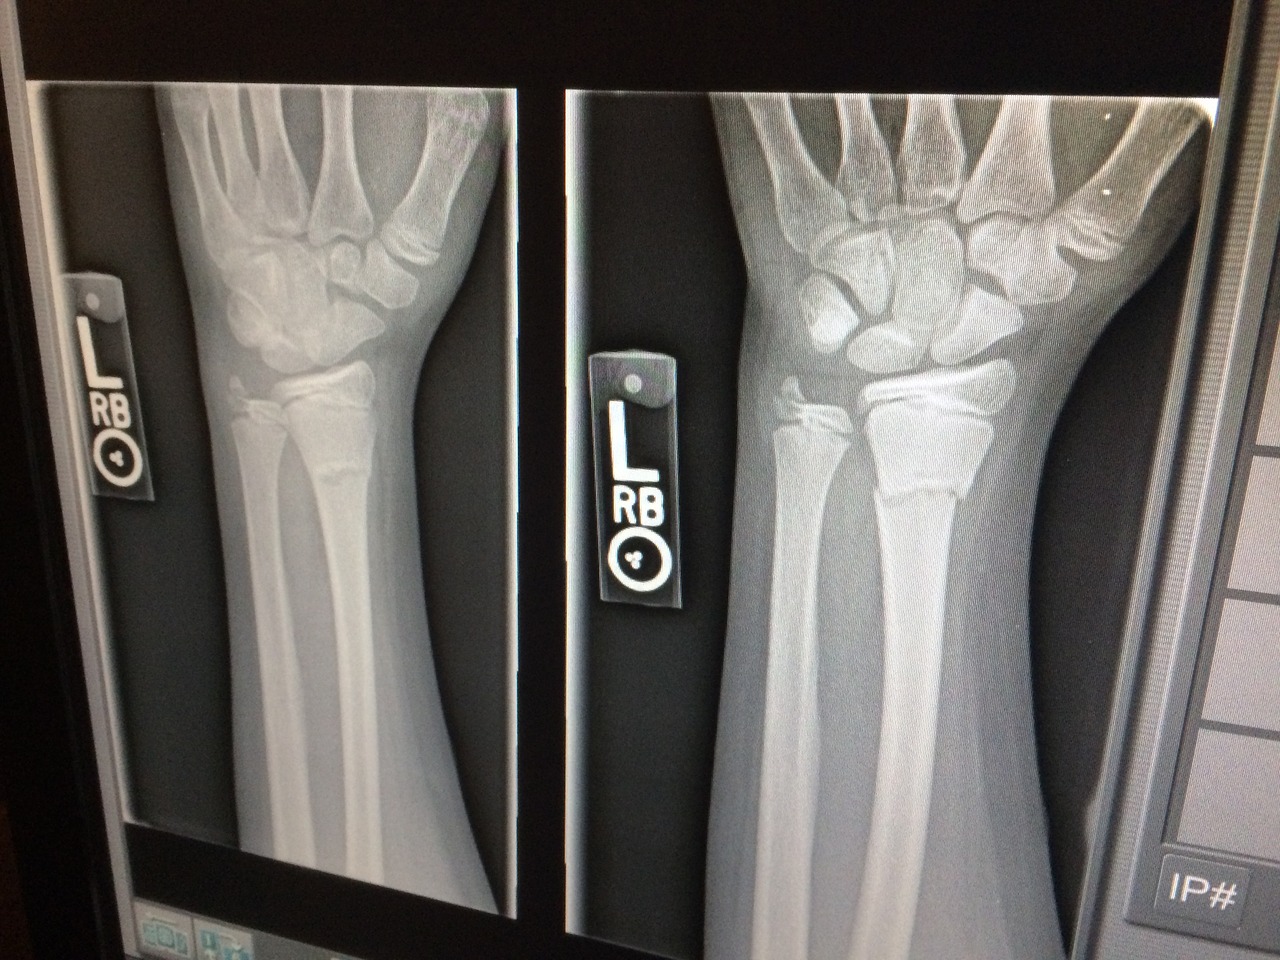 X-ray,medical,broken,arm,doctor - free image from needpix.com